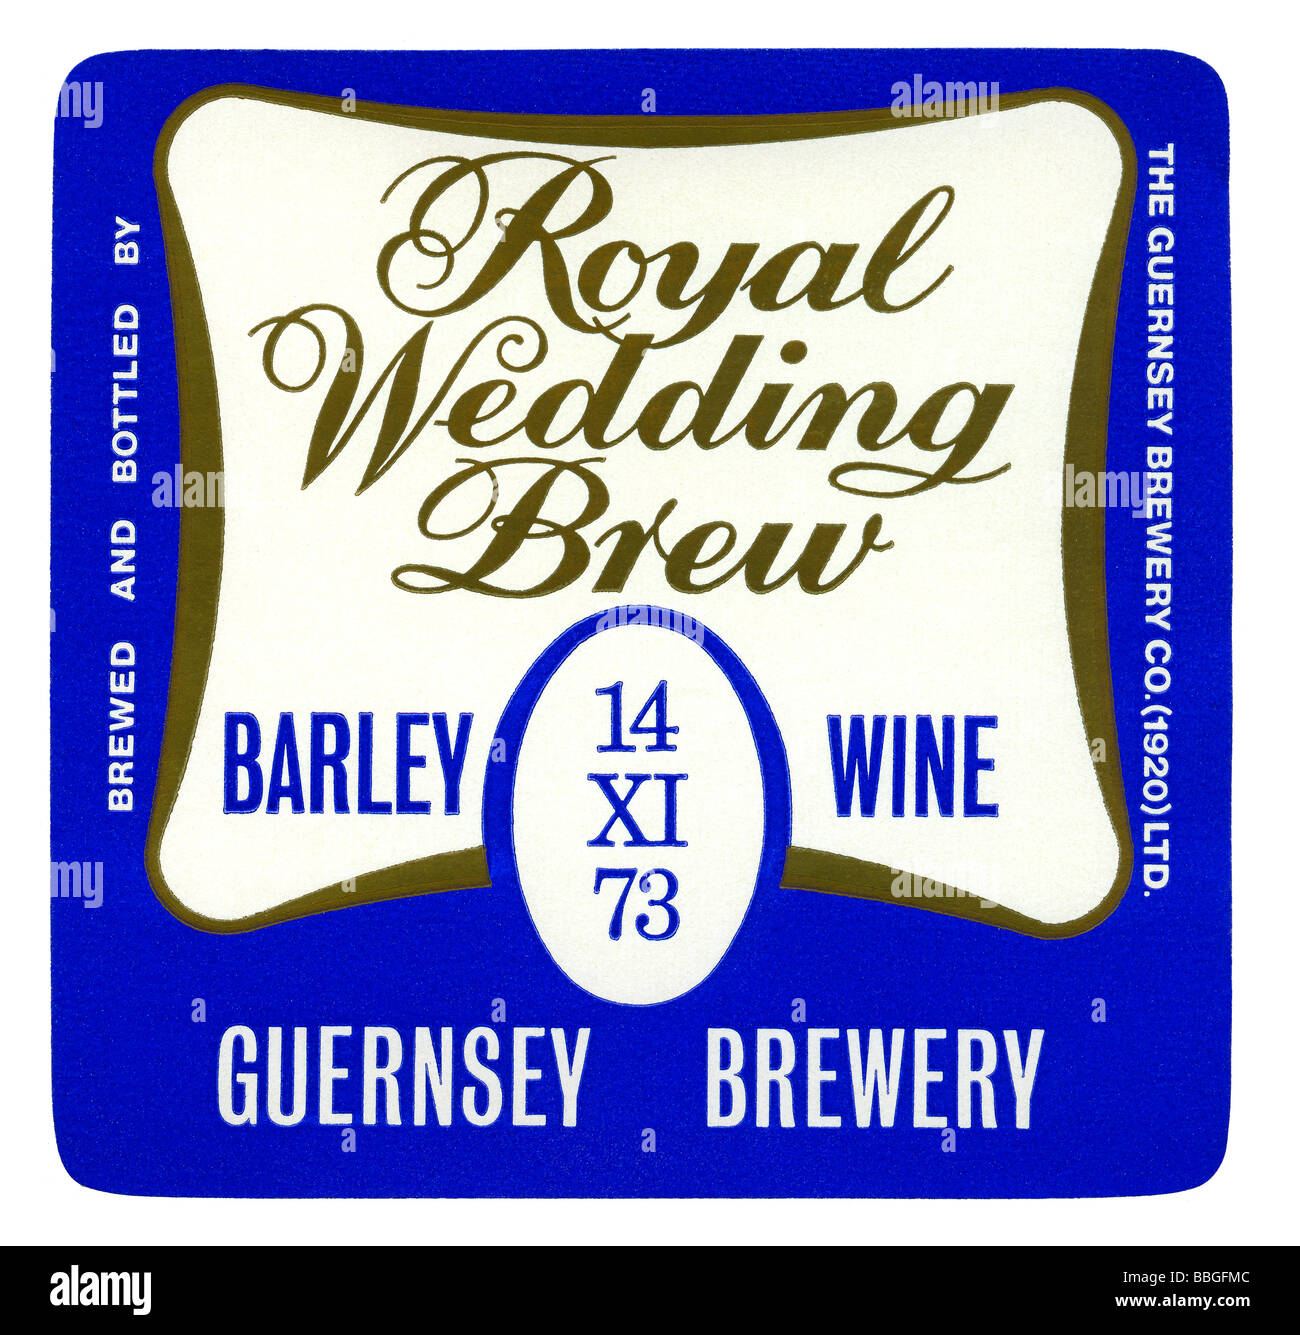 Vecchia birra britannica etichetta per Guernsey Brewery Royal Wedding Brew, Guernsey, Isole del Canale, 1973 Foto Stock